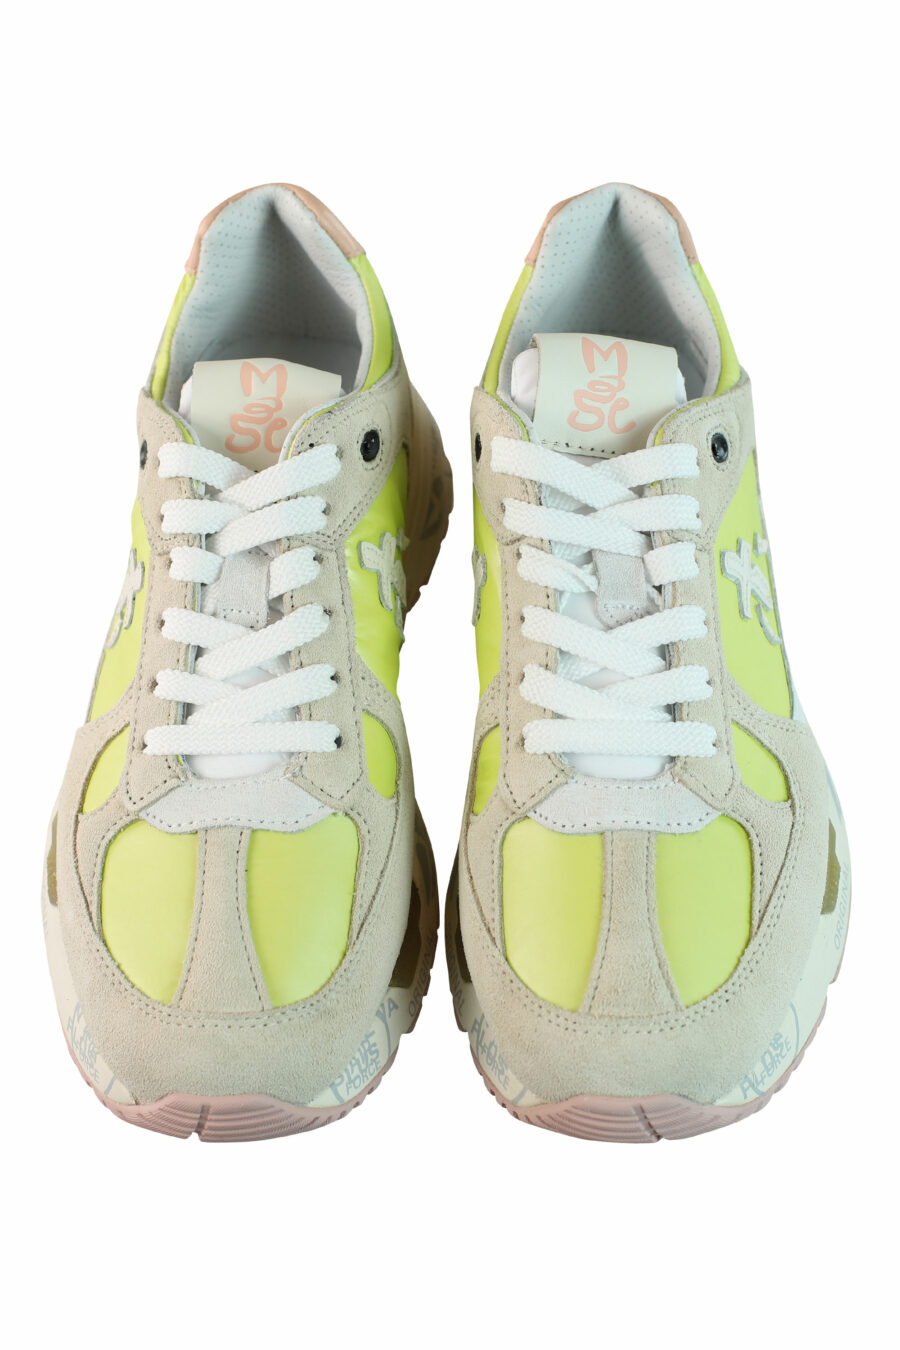 Zapatillas beige con verde lima "mase-d 6256" - IMG 0883